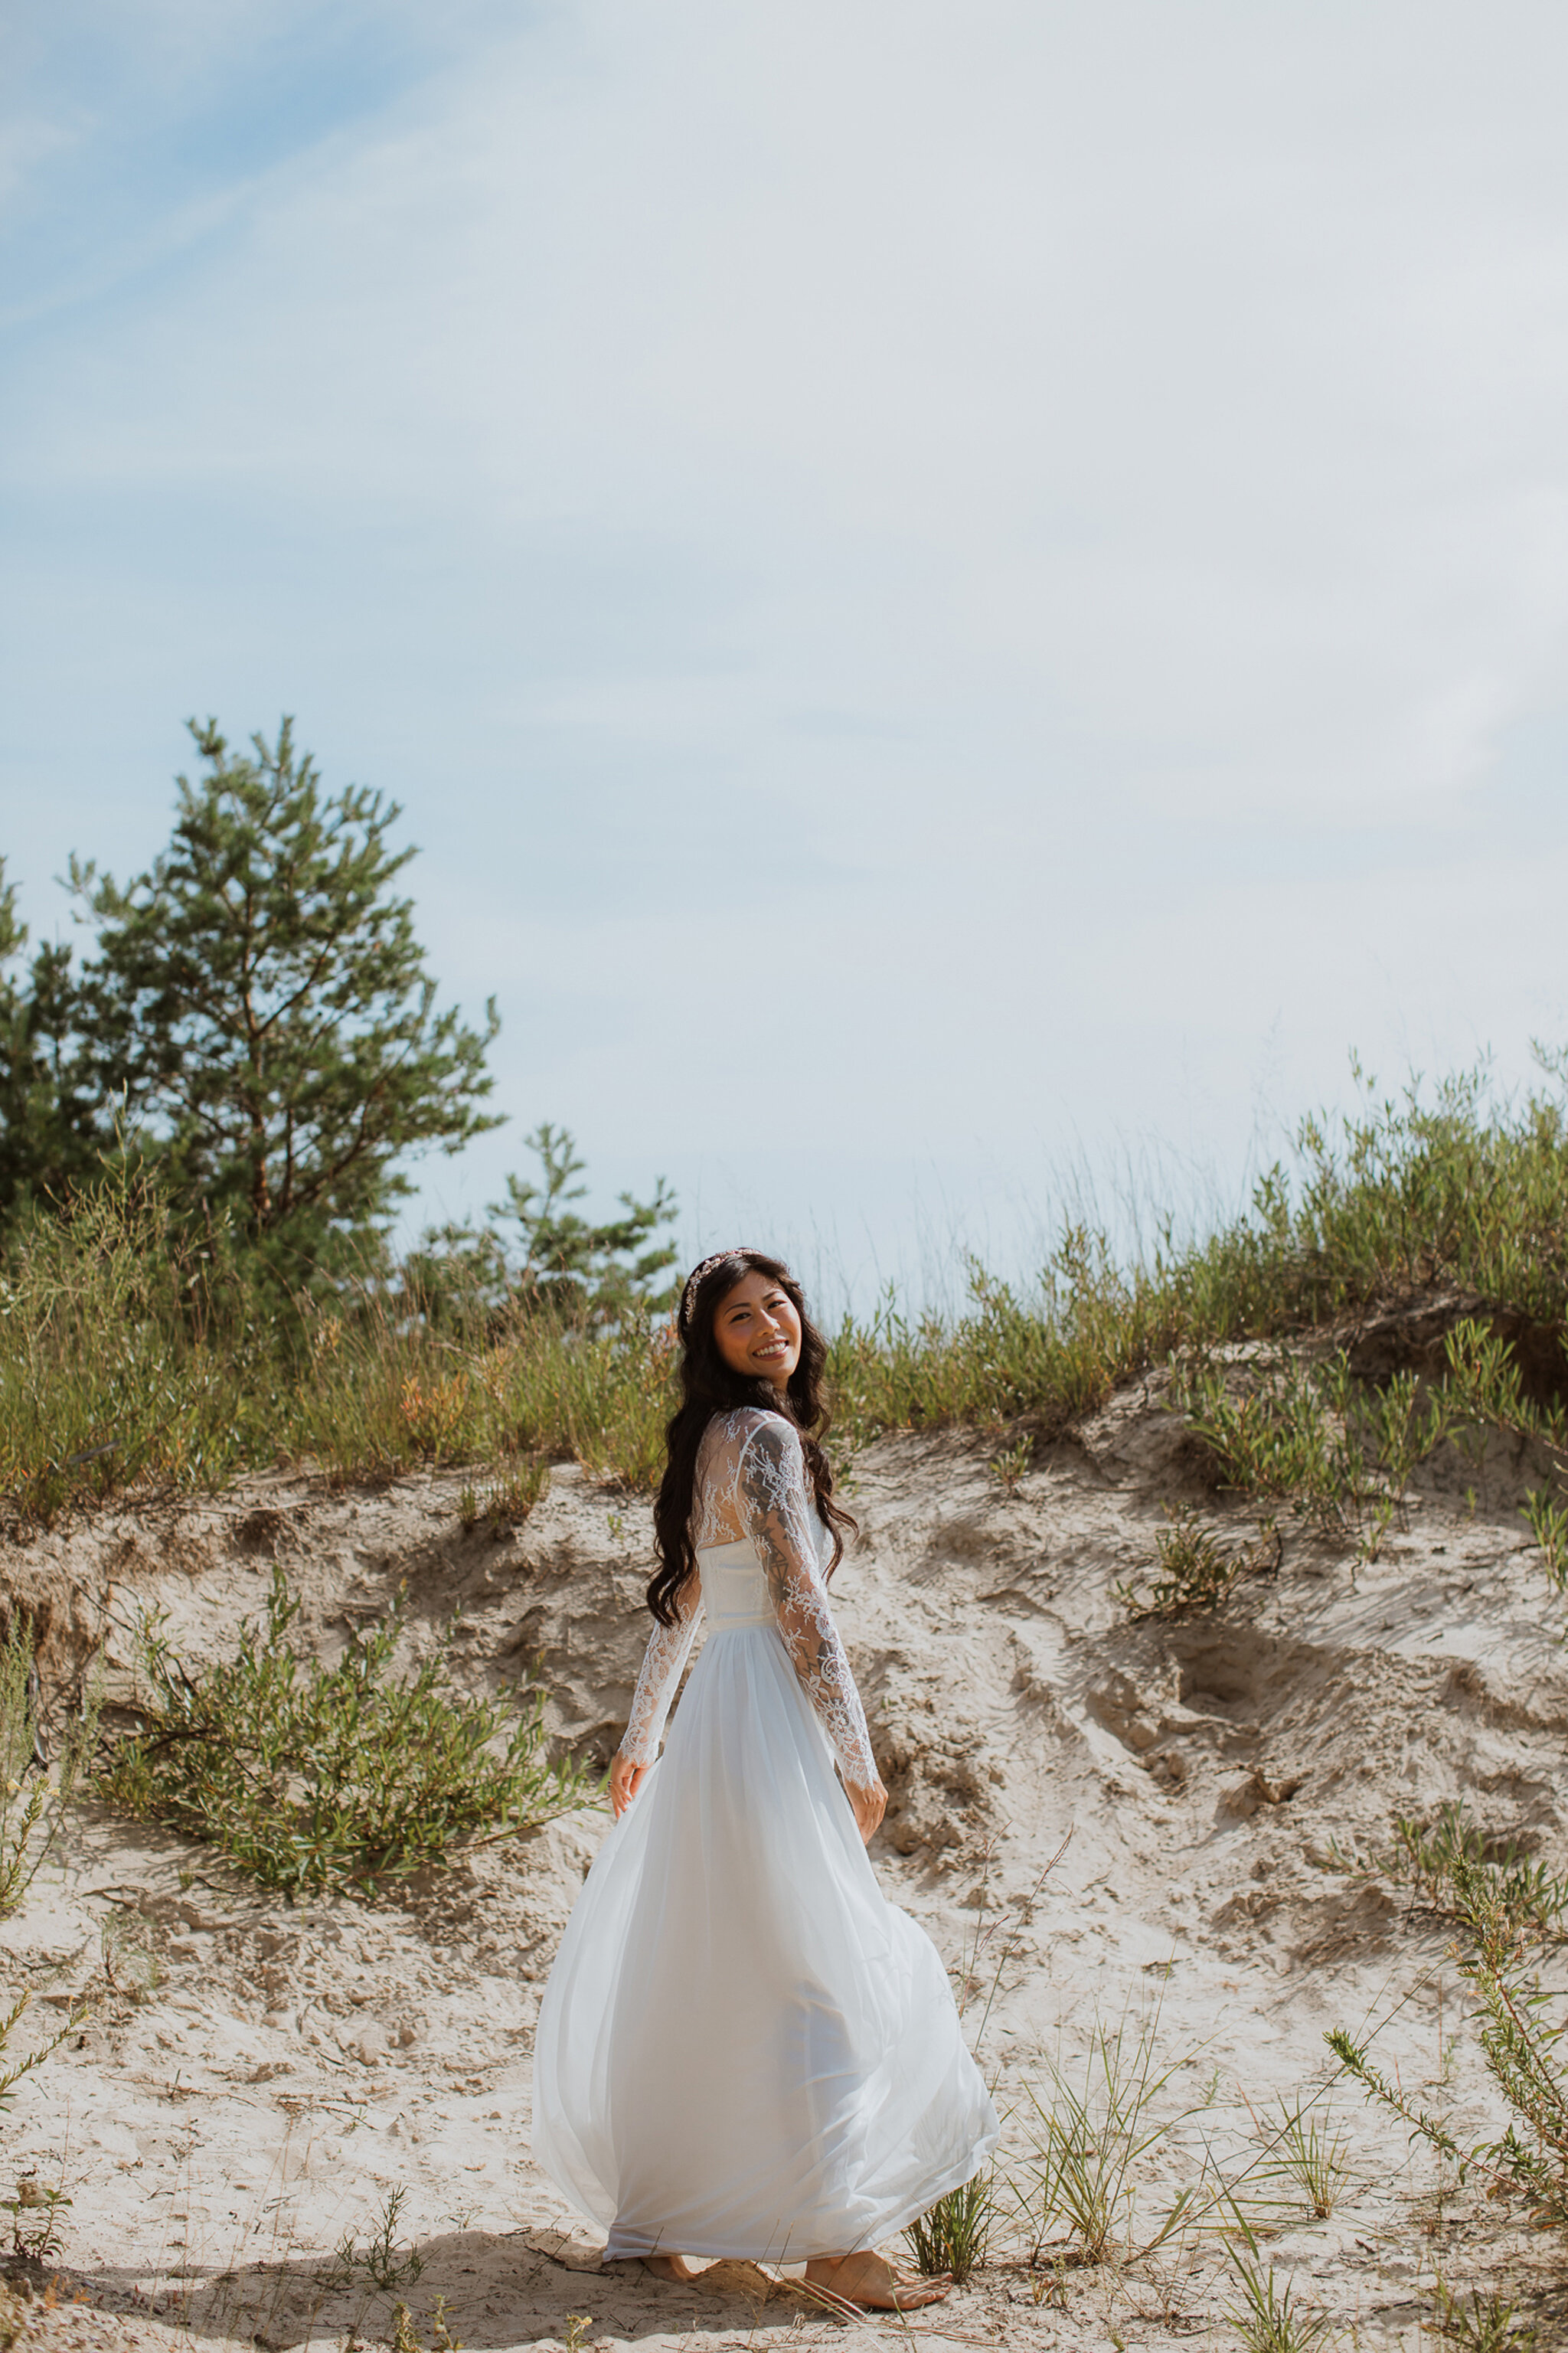 Boho bride lace wedding dress in sand dunes